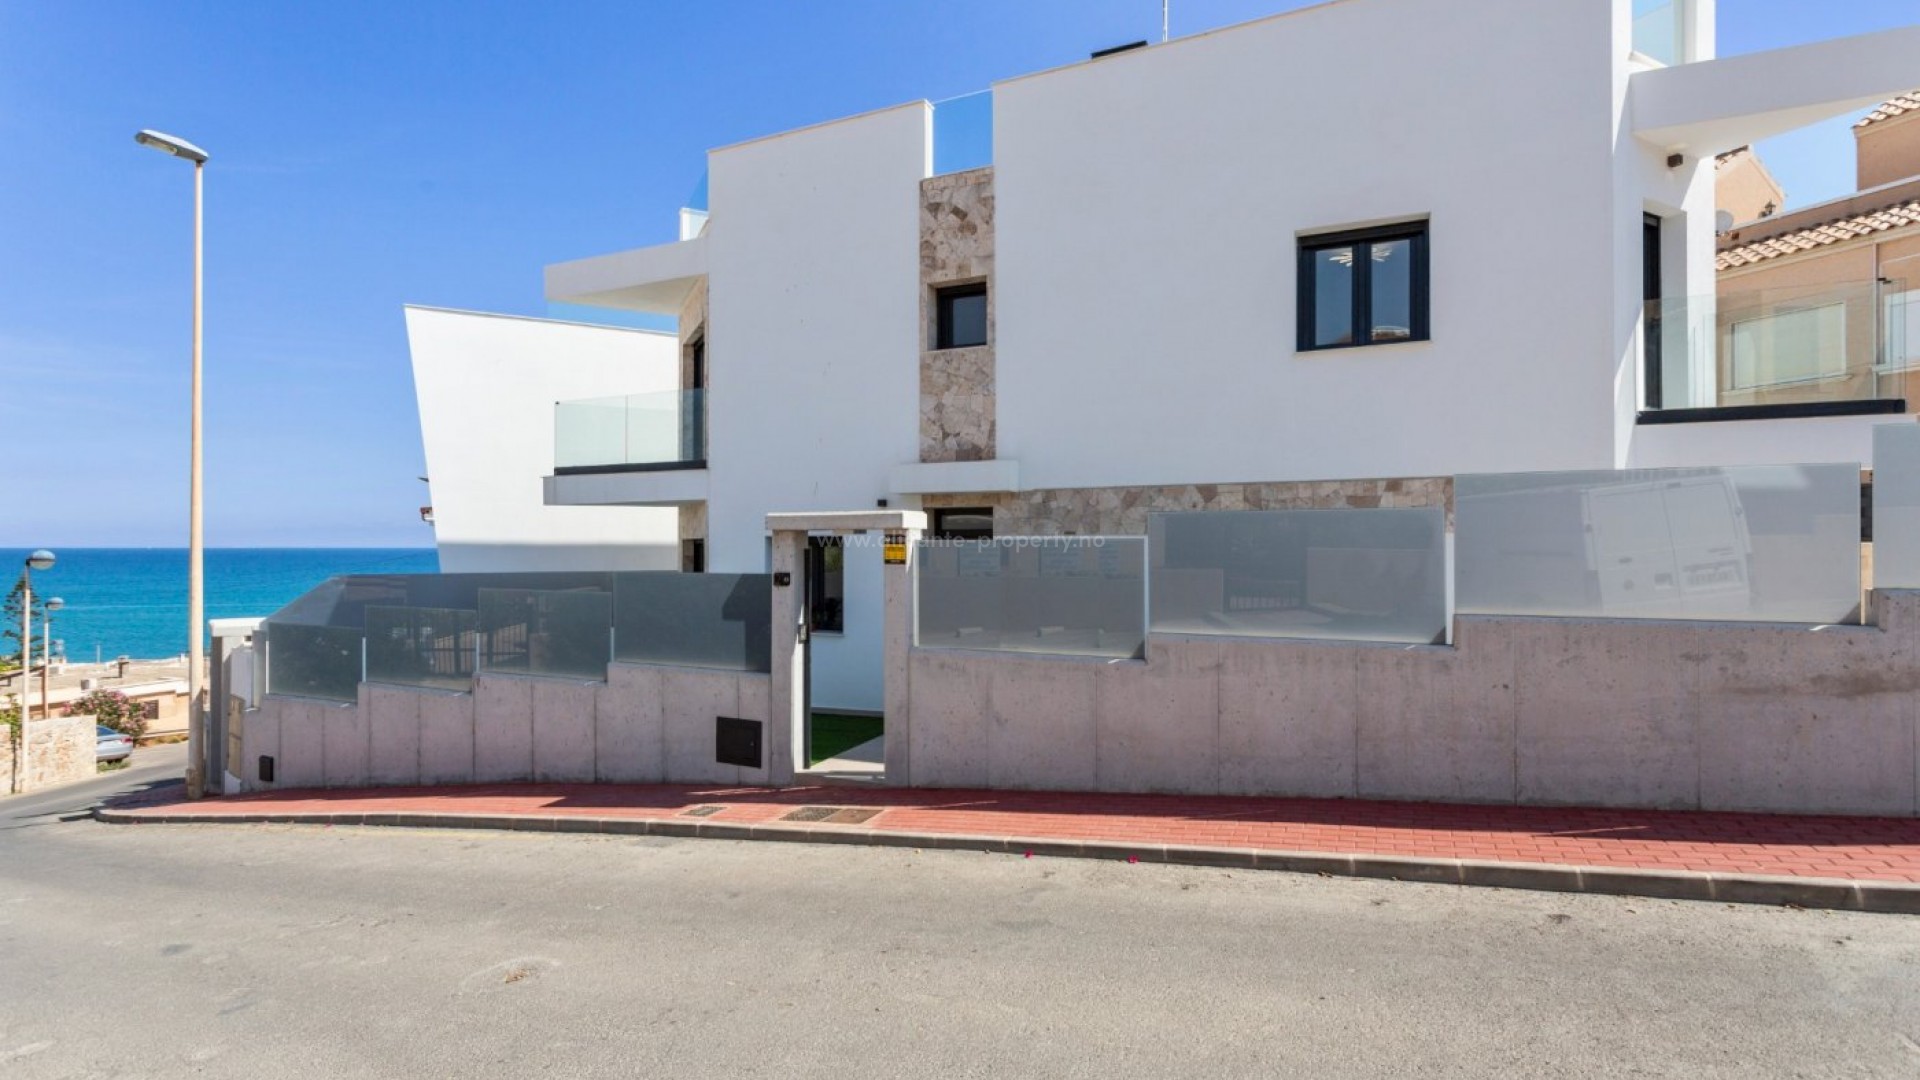 Villa/hus på La Mata stranden i Torrevieja, 3 soverom, 4 bad, saltvannsbasseng, terrasse, solarium med boblebad og bardisk, ferdig halvkjeller